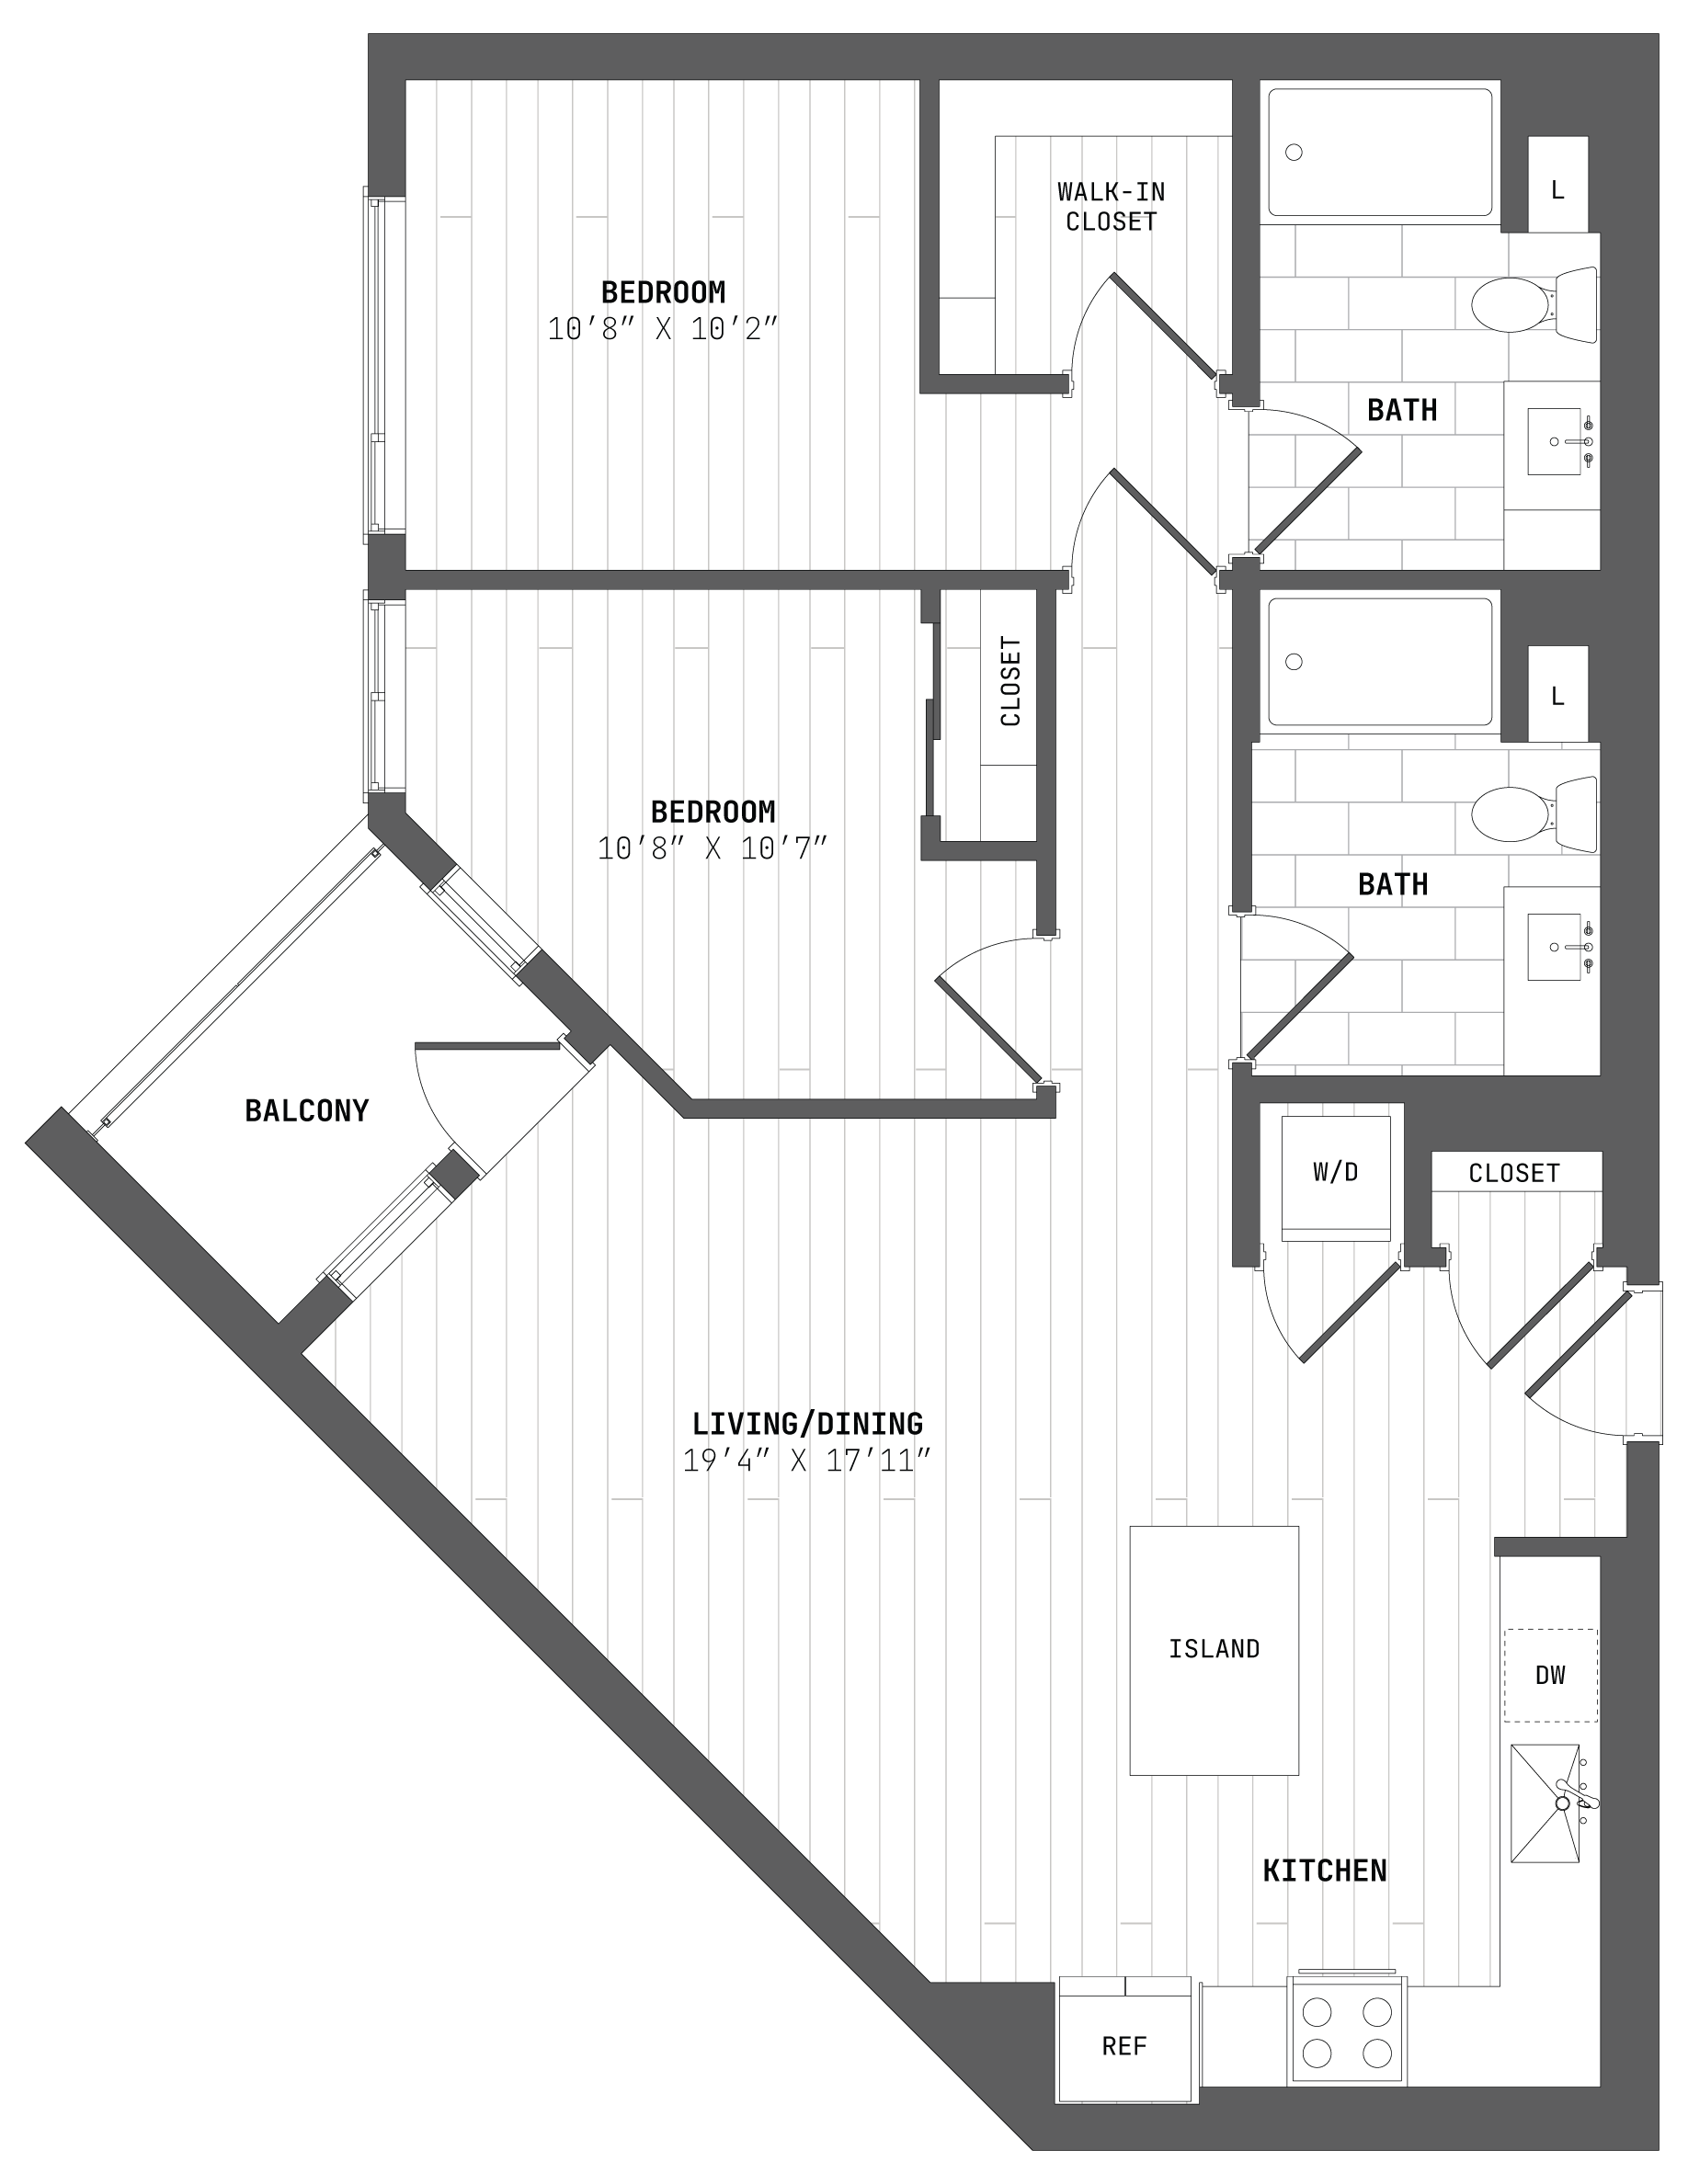 Apartment 4785260 floorplan